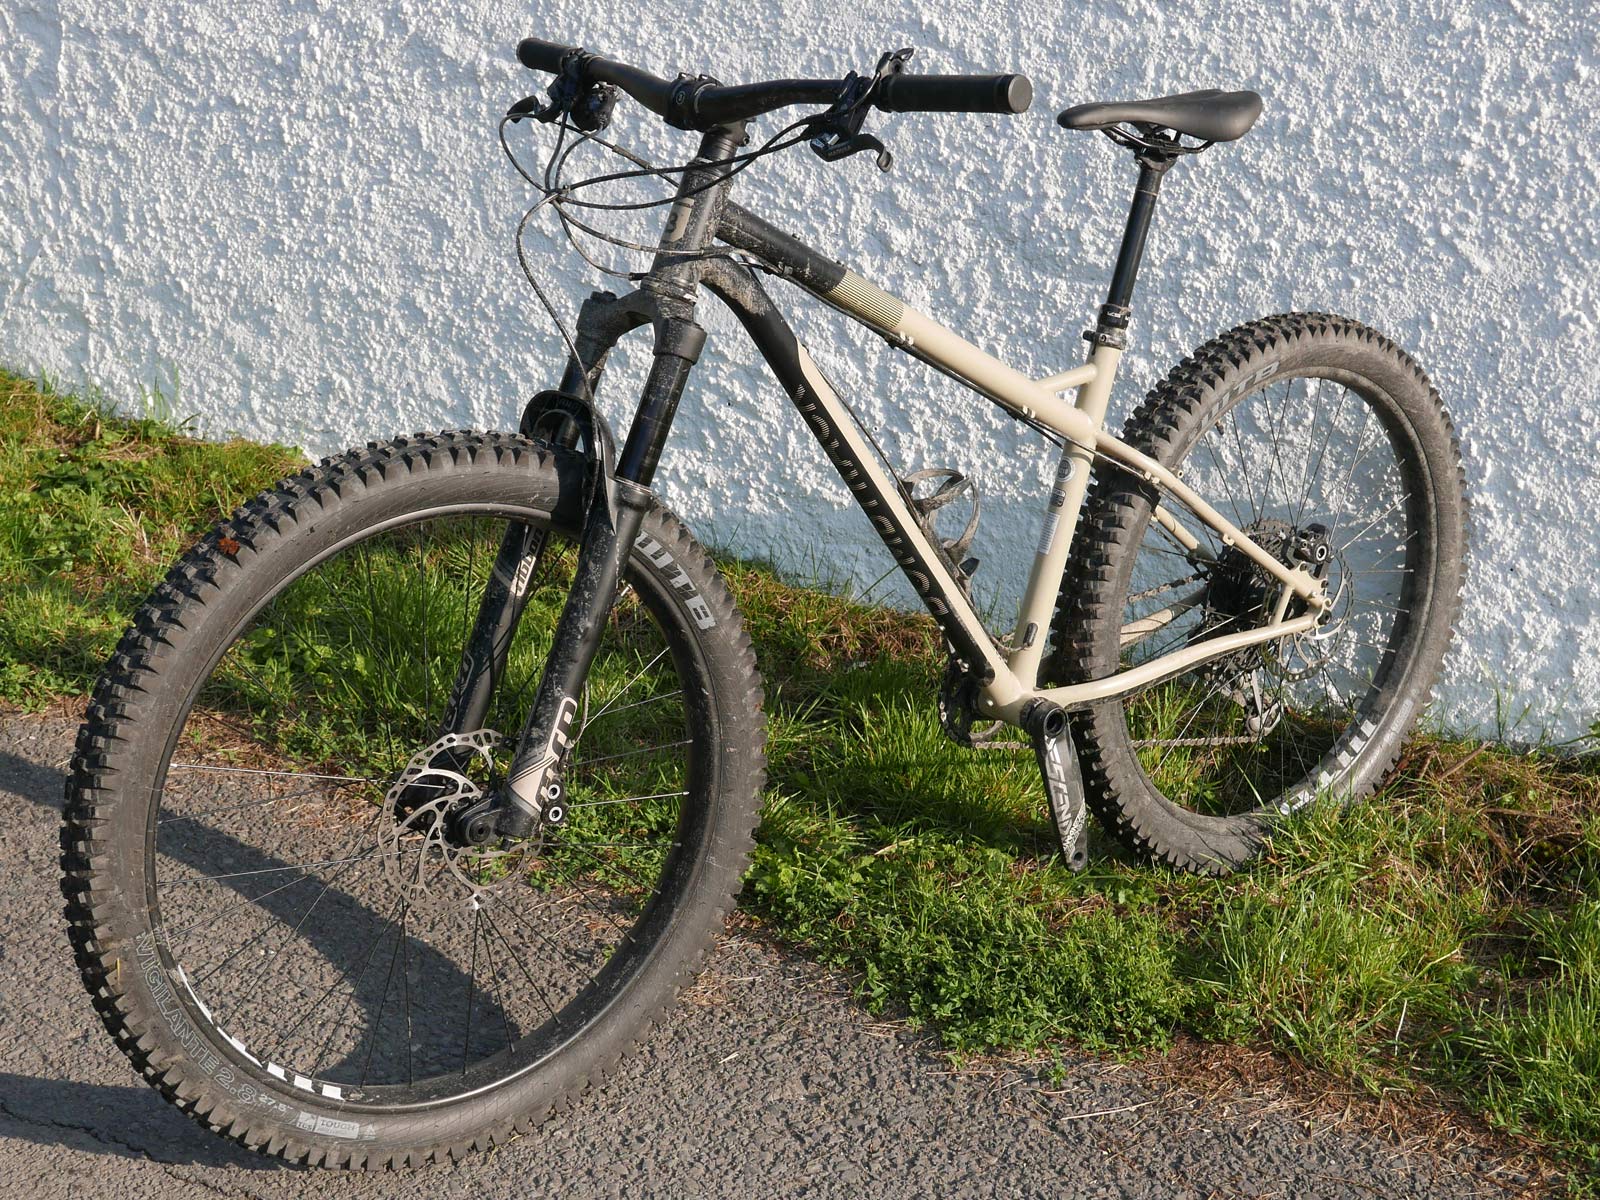 2020 Bombtrack Cale mountain bike, 120mm travel 4130 steel hardtail MTB adventure trail bike